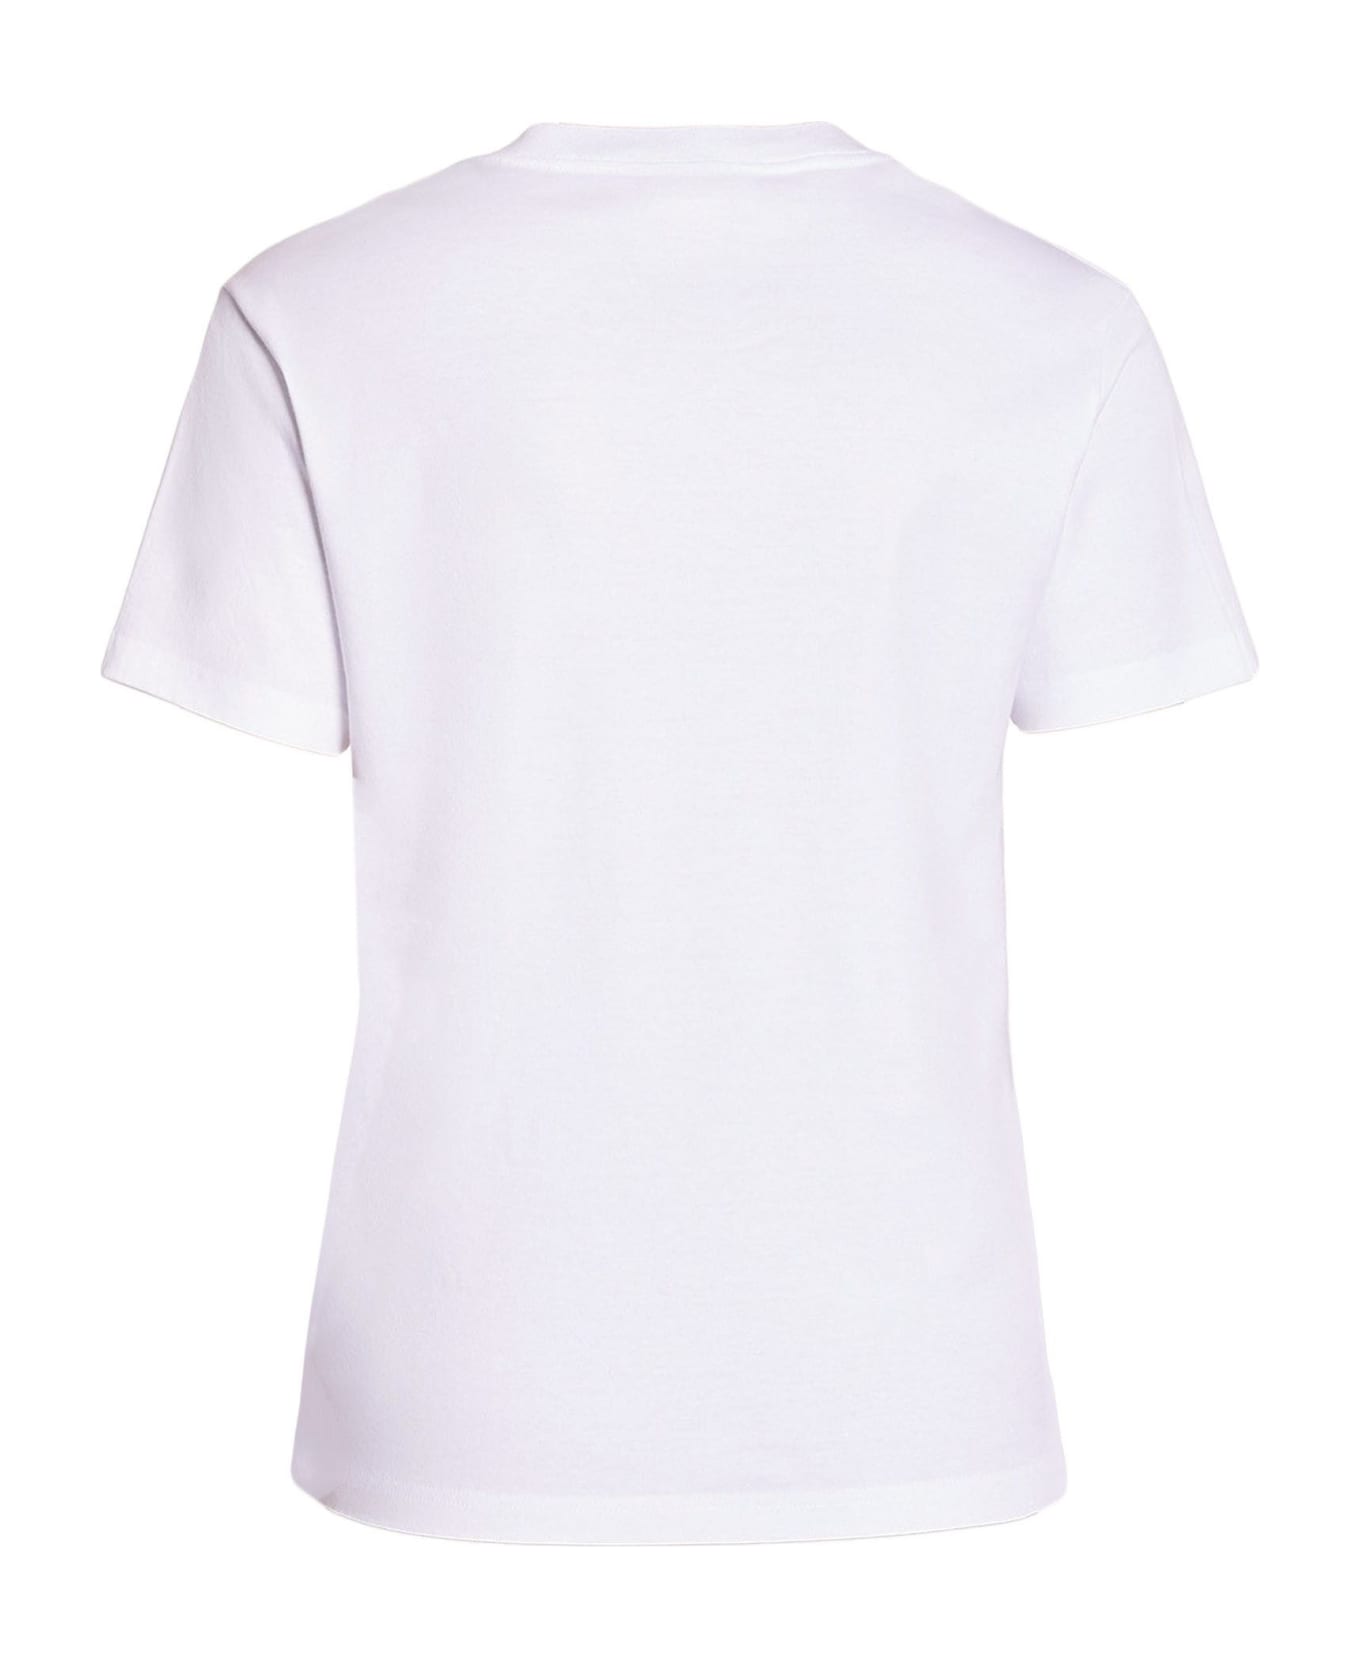 Lanvin White Cotton T-shirt - White Tシャツ